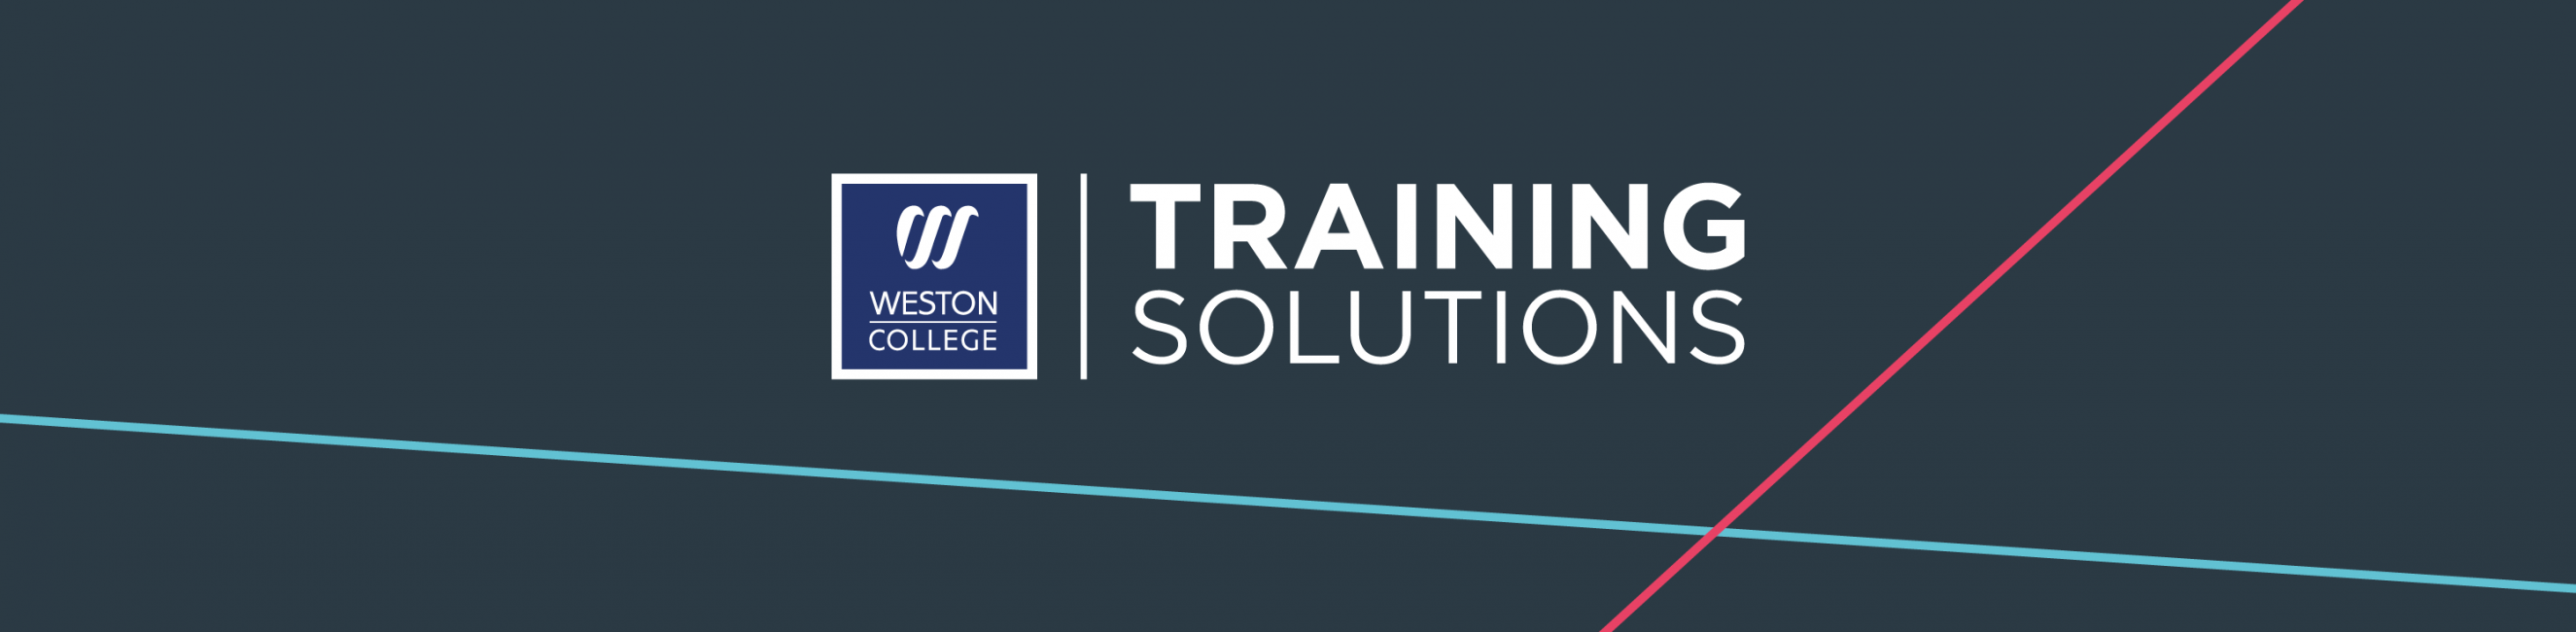 training solution